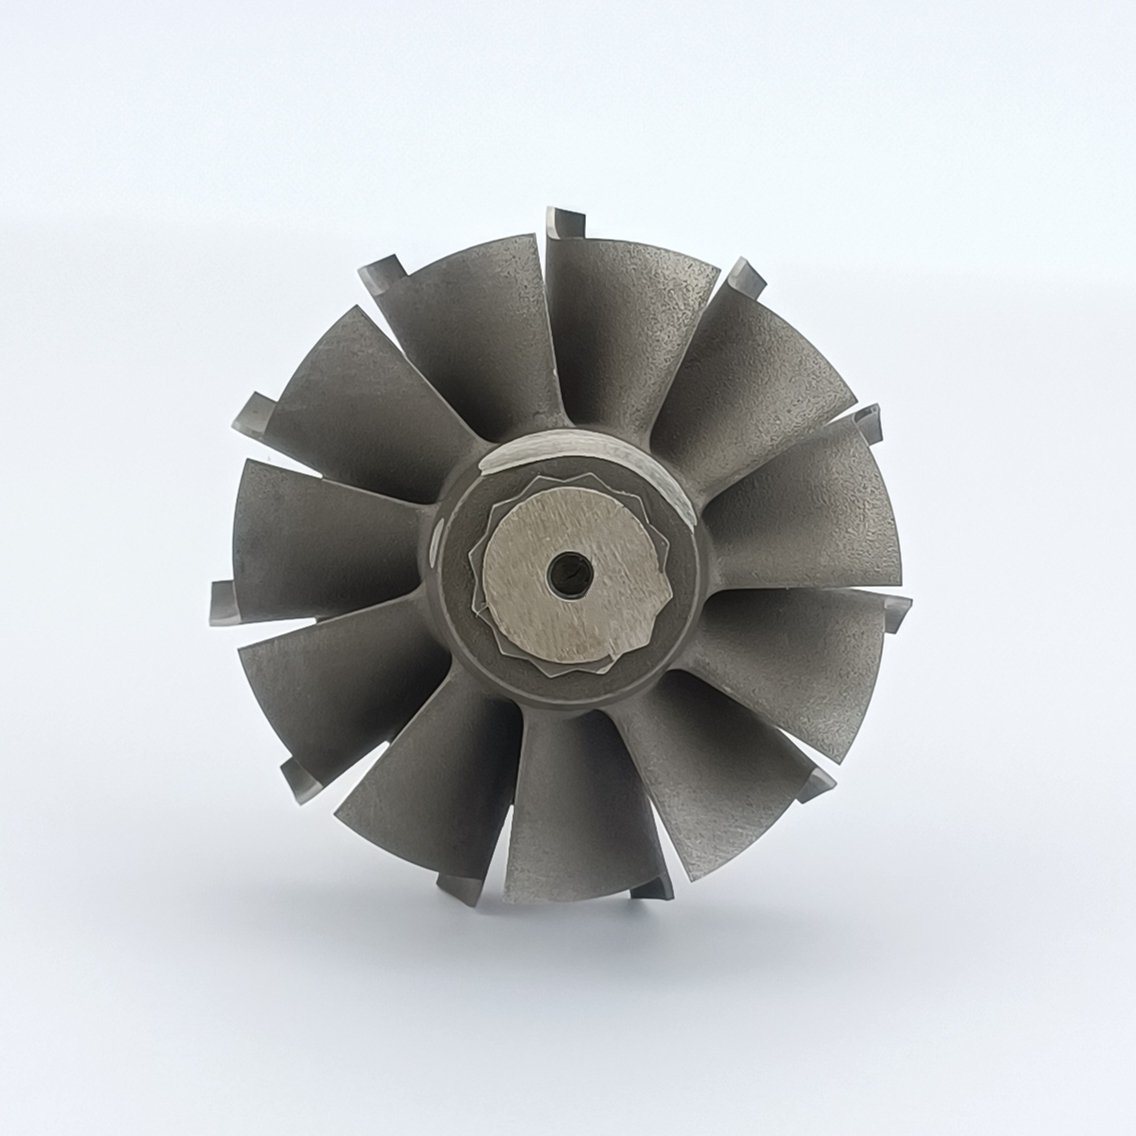 Turbo Turbine Wheel Shaft S200 Ind 70.1mm Exd 62.8mm Shaft Length 146mm